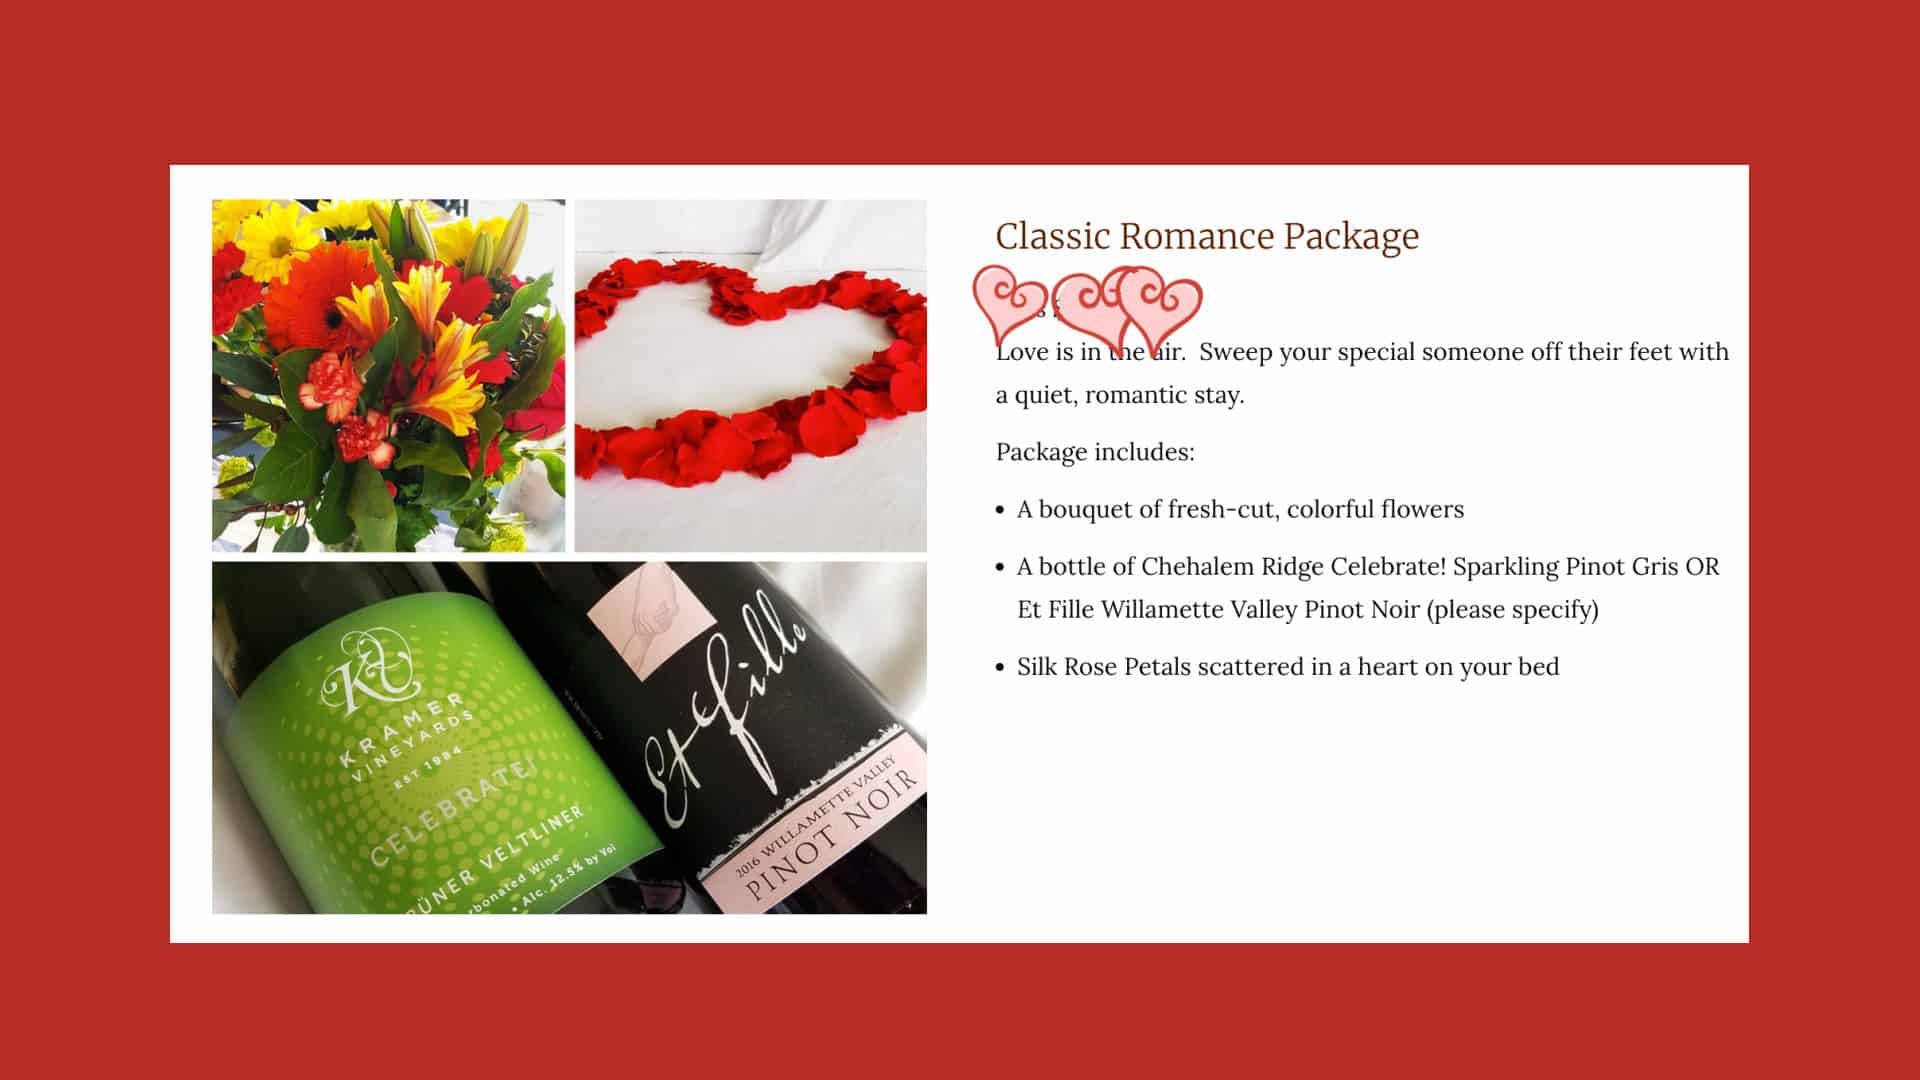 Classic Romance Package from Chehalem Ridge